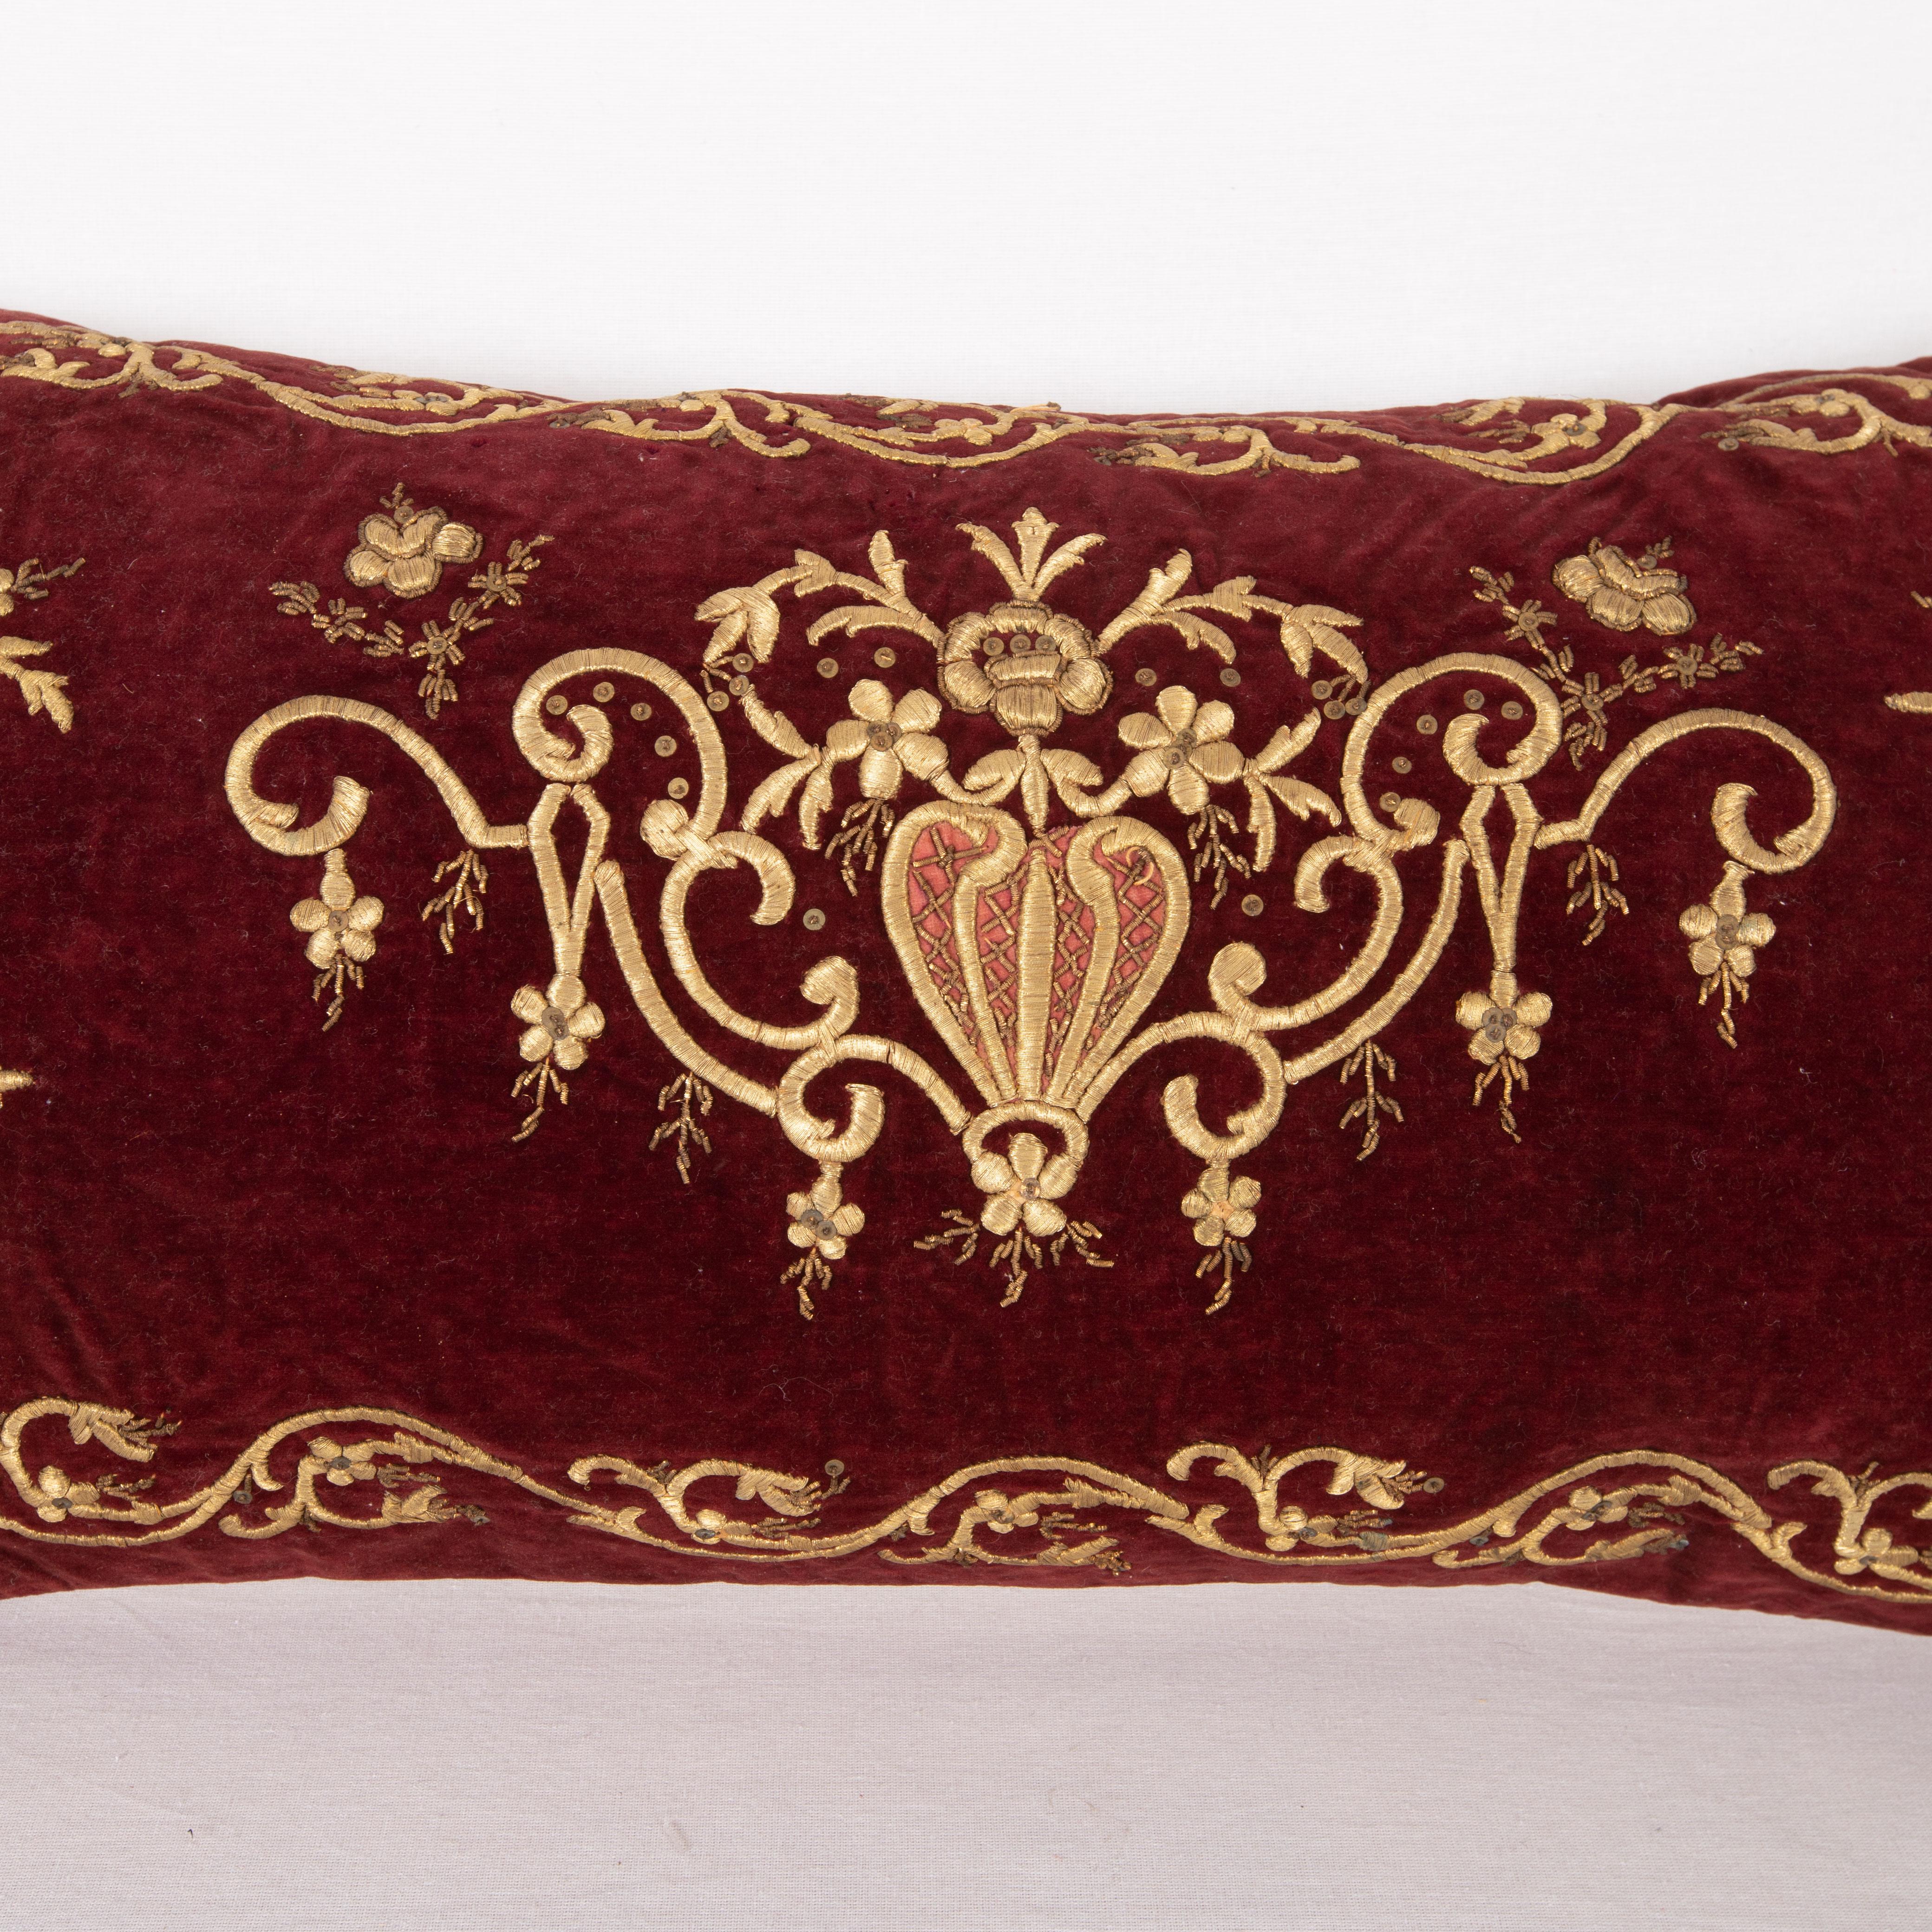 Turkish Antique Silk Velvet Ottoman Sarma Pillow Cover, L 19th C.